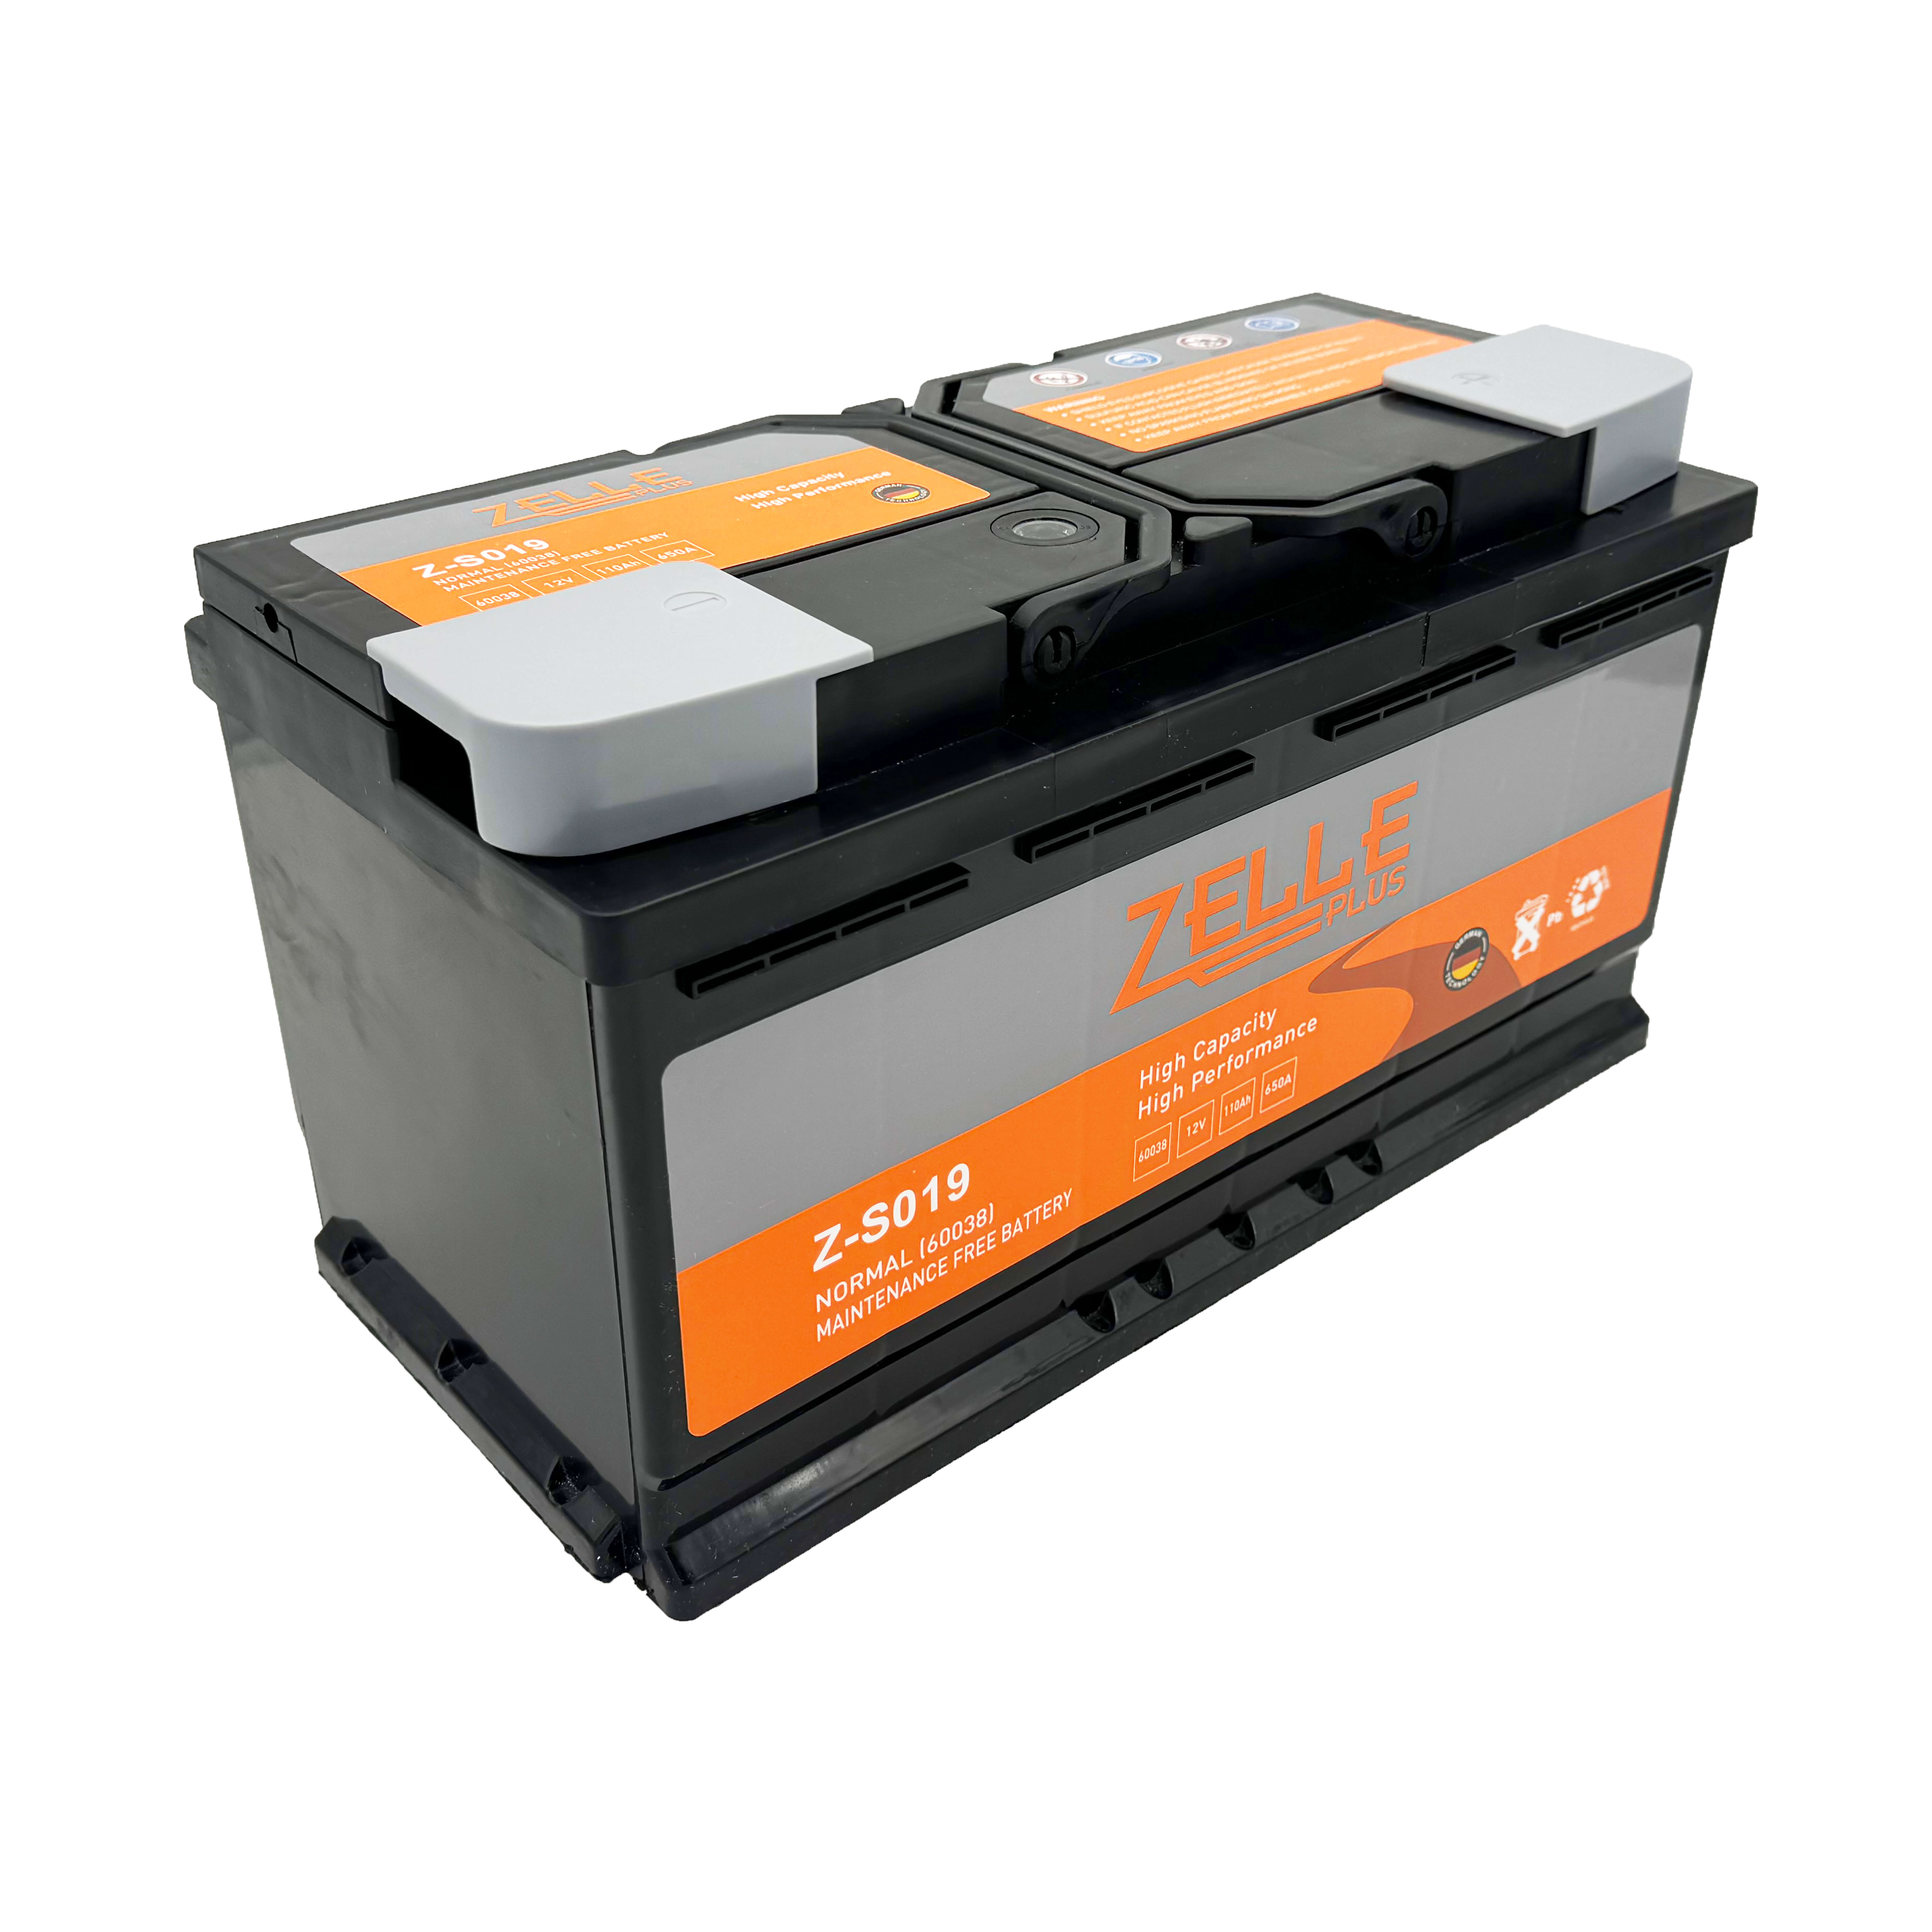 Zelle Plus 019 Conventional Vehicle Battery (Z-S019)